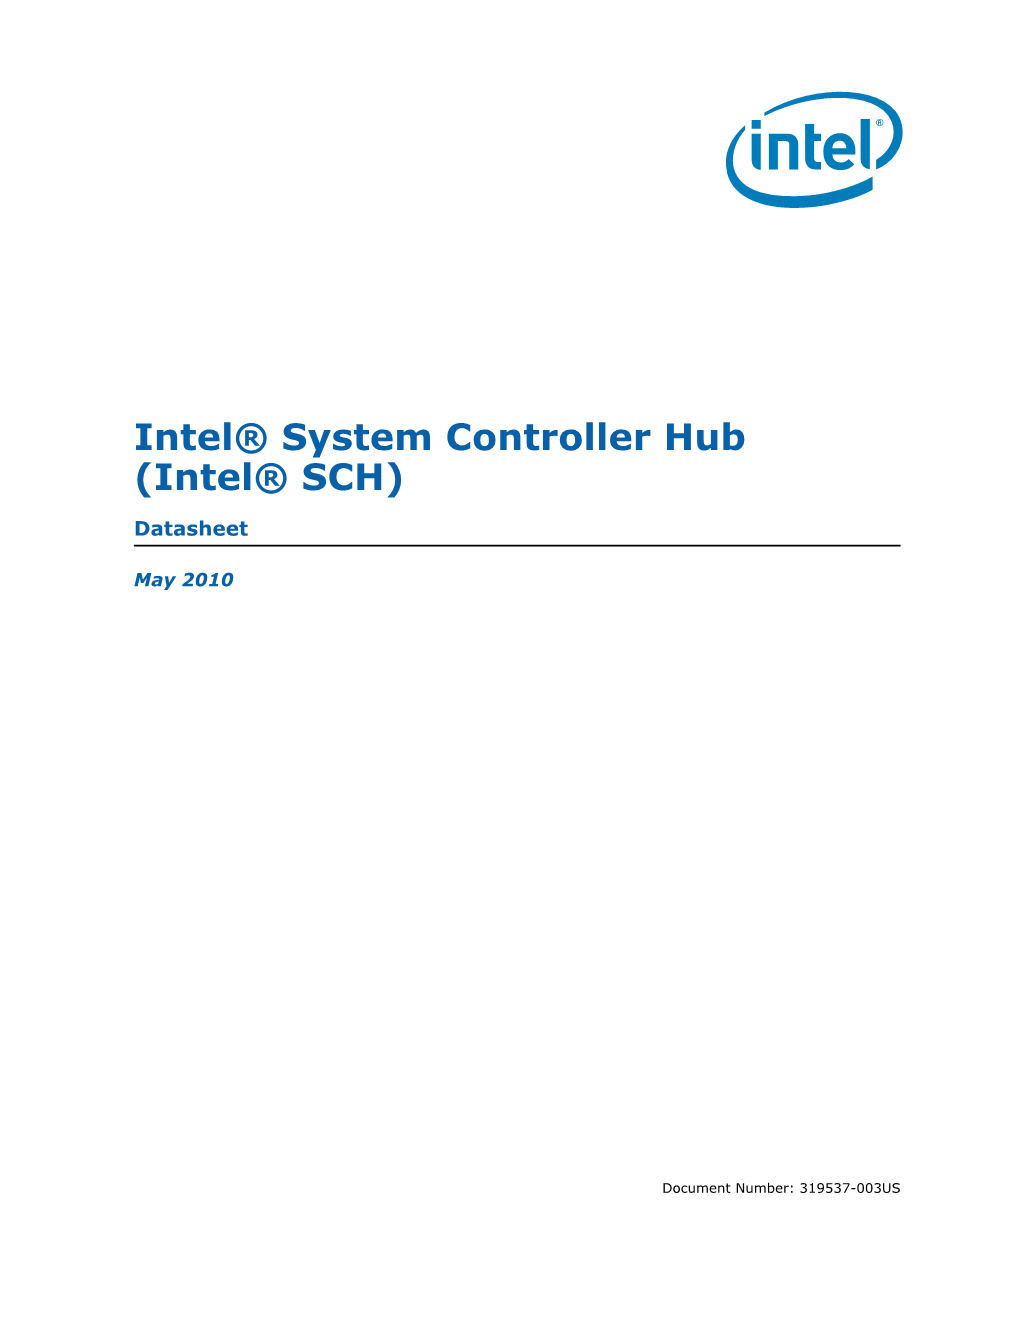 Intel® System Controller Hub (Intel® SCH) Datasheet